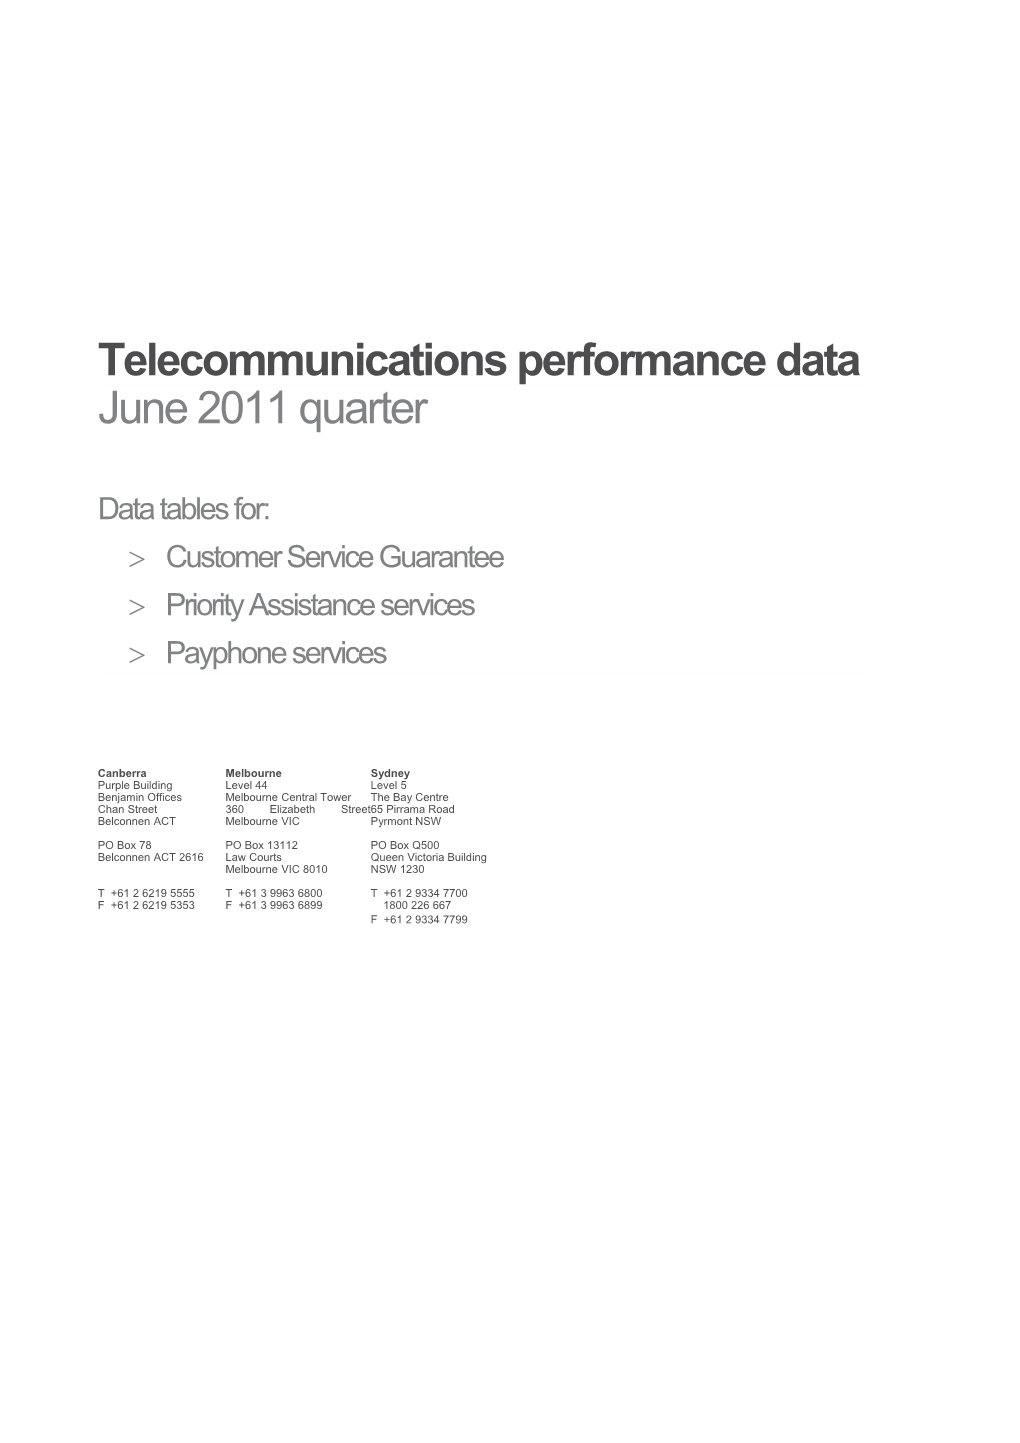 Telecommunications Performance Data - June 2011 Quarter